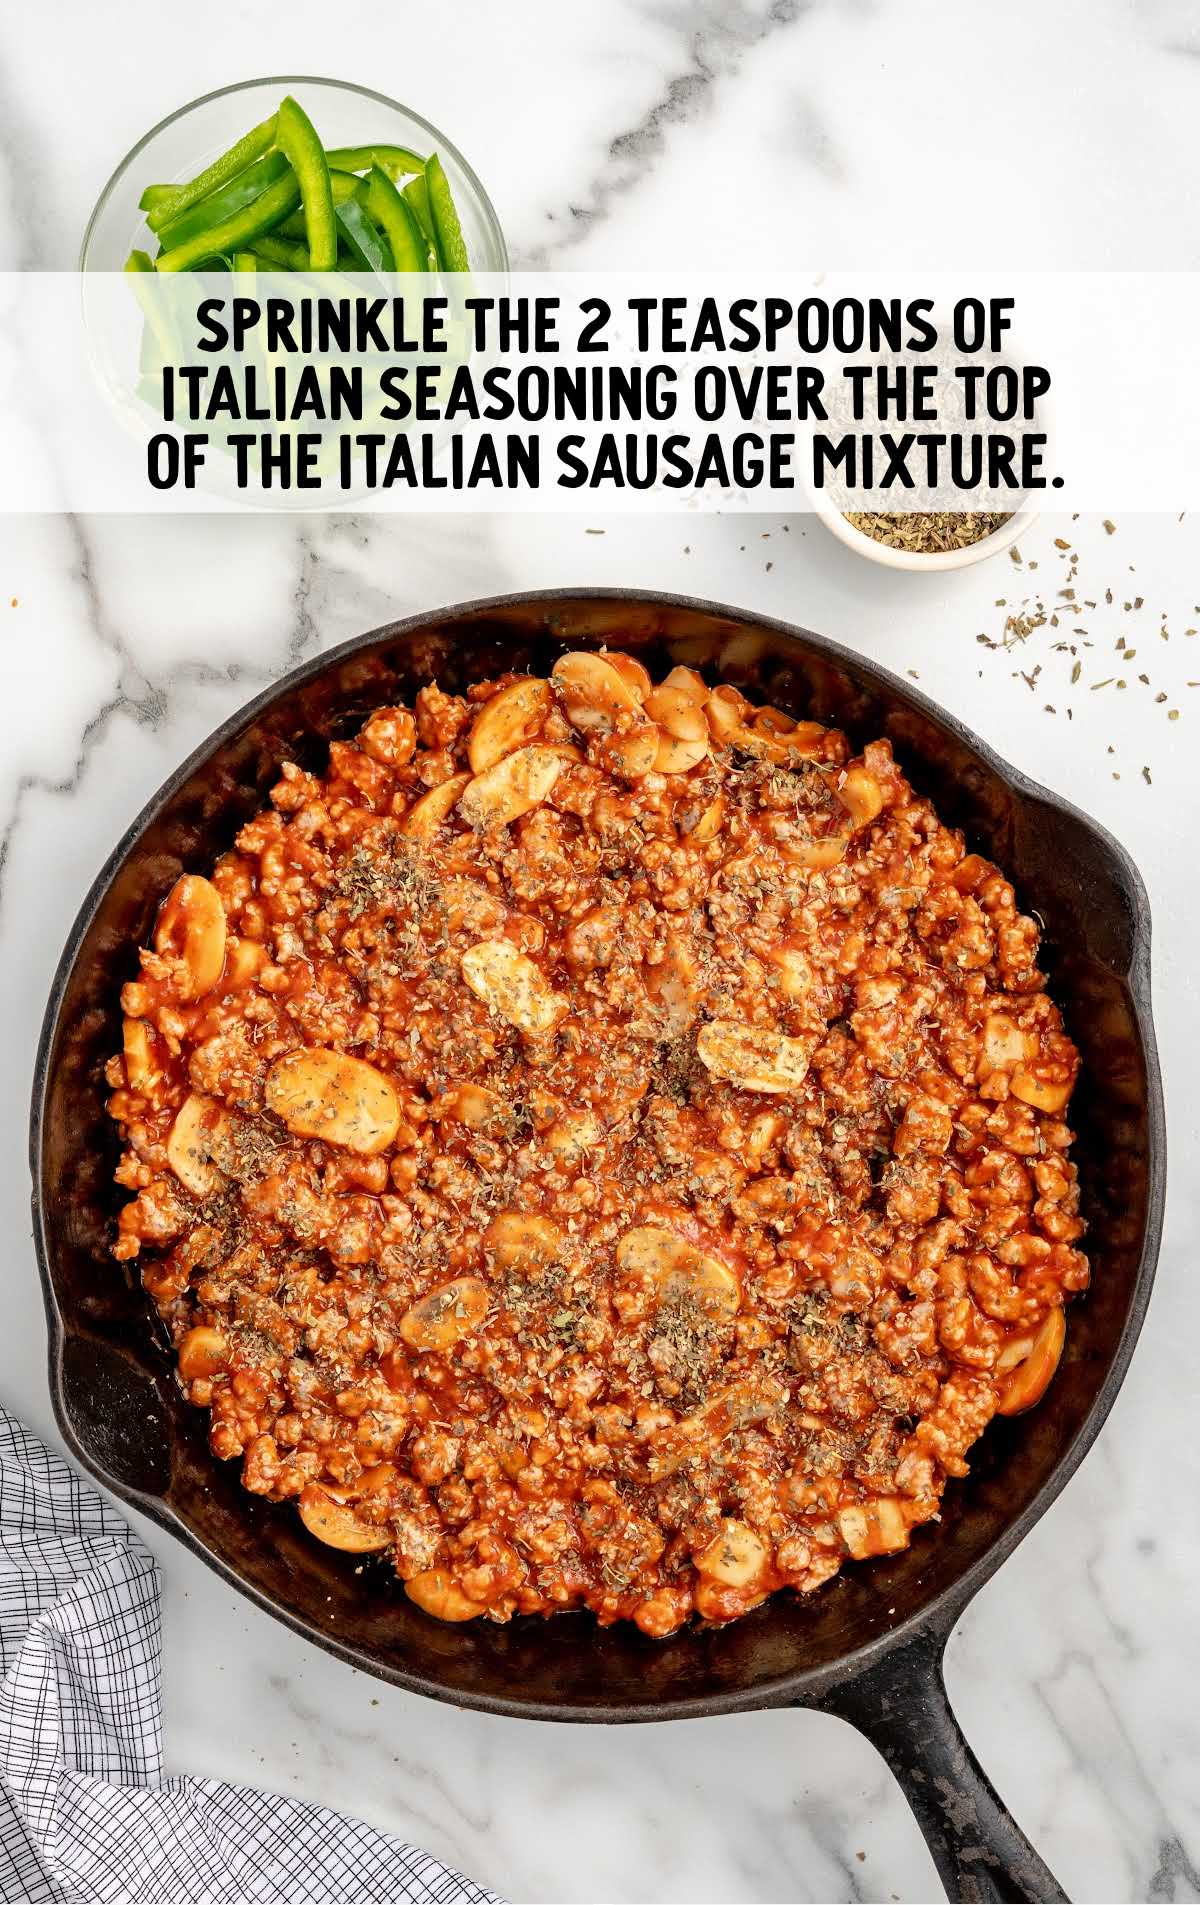 Italian seasonings sprinkled over the Italian sausage mixture in a skillet